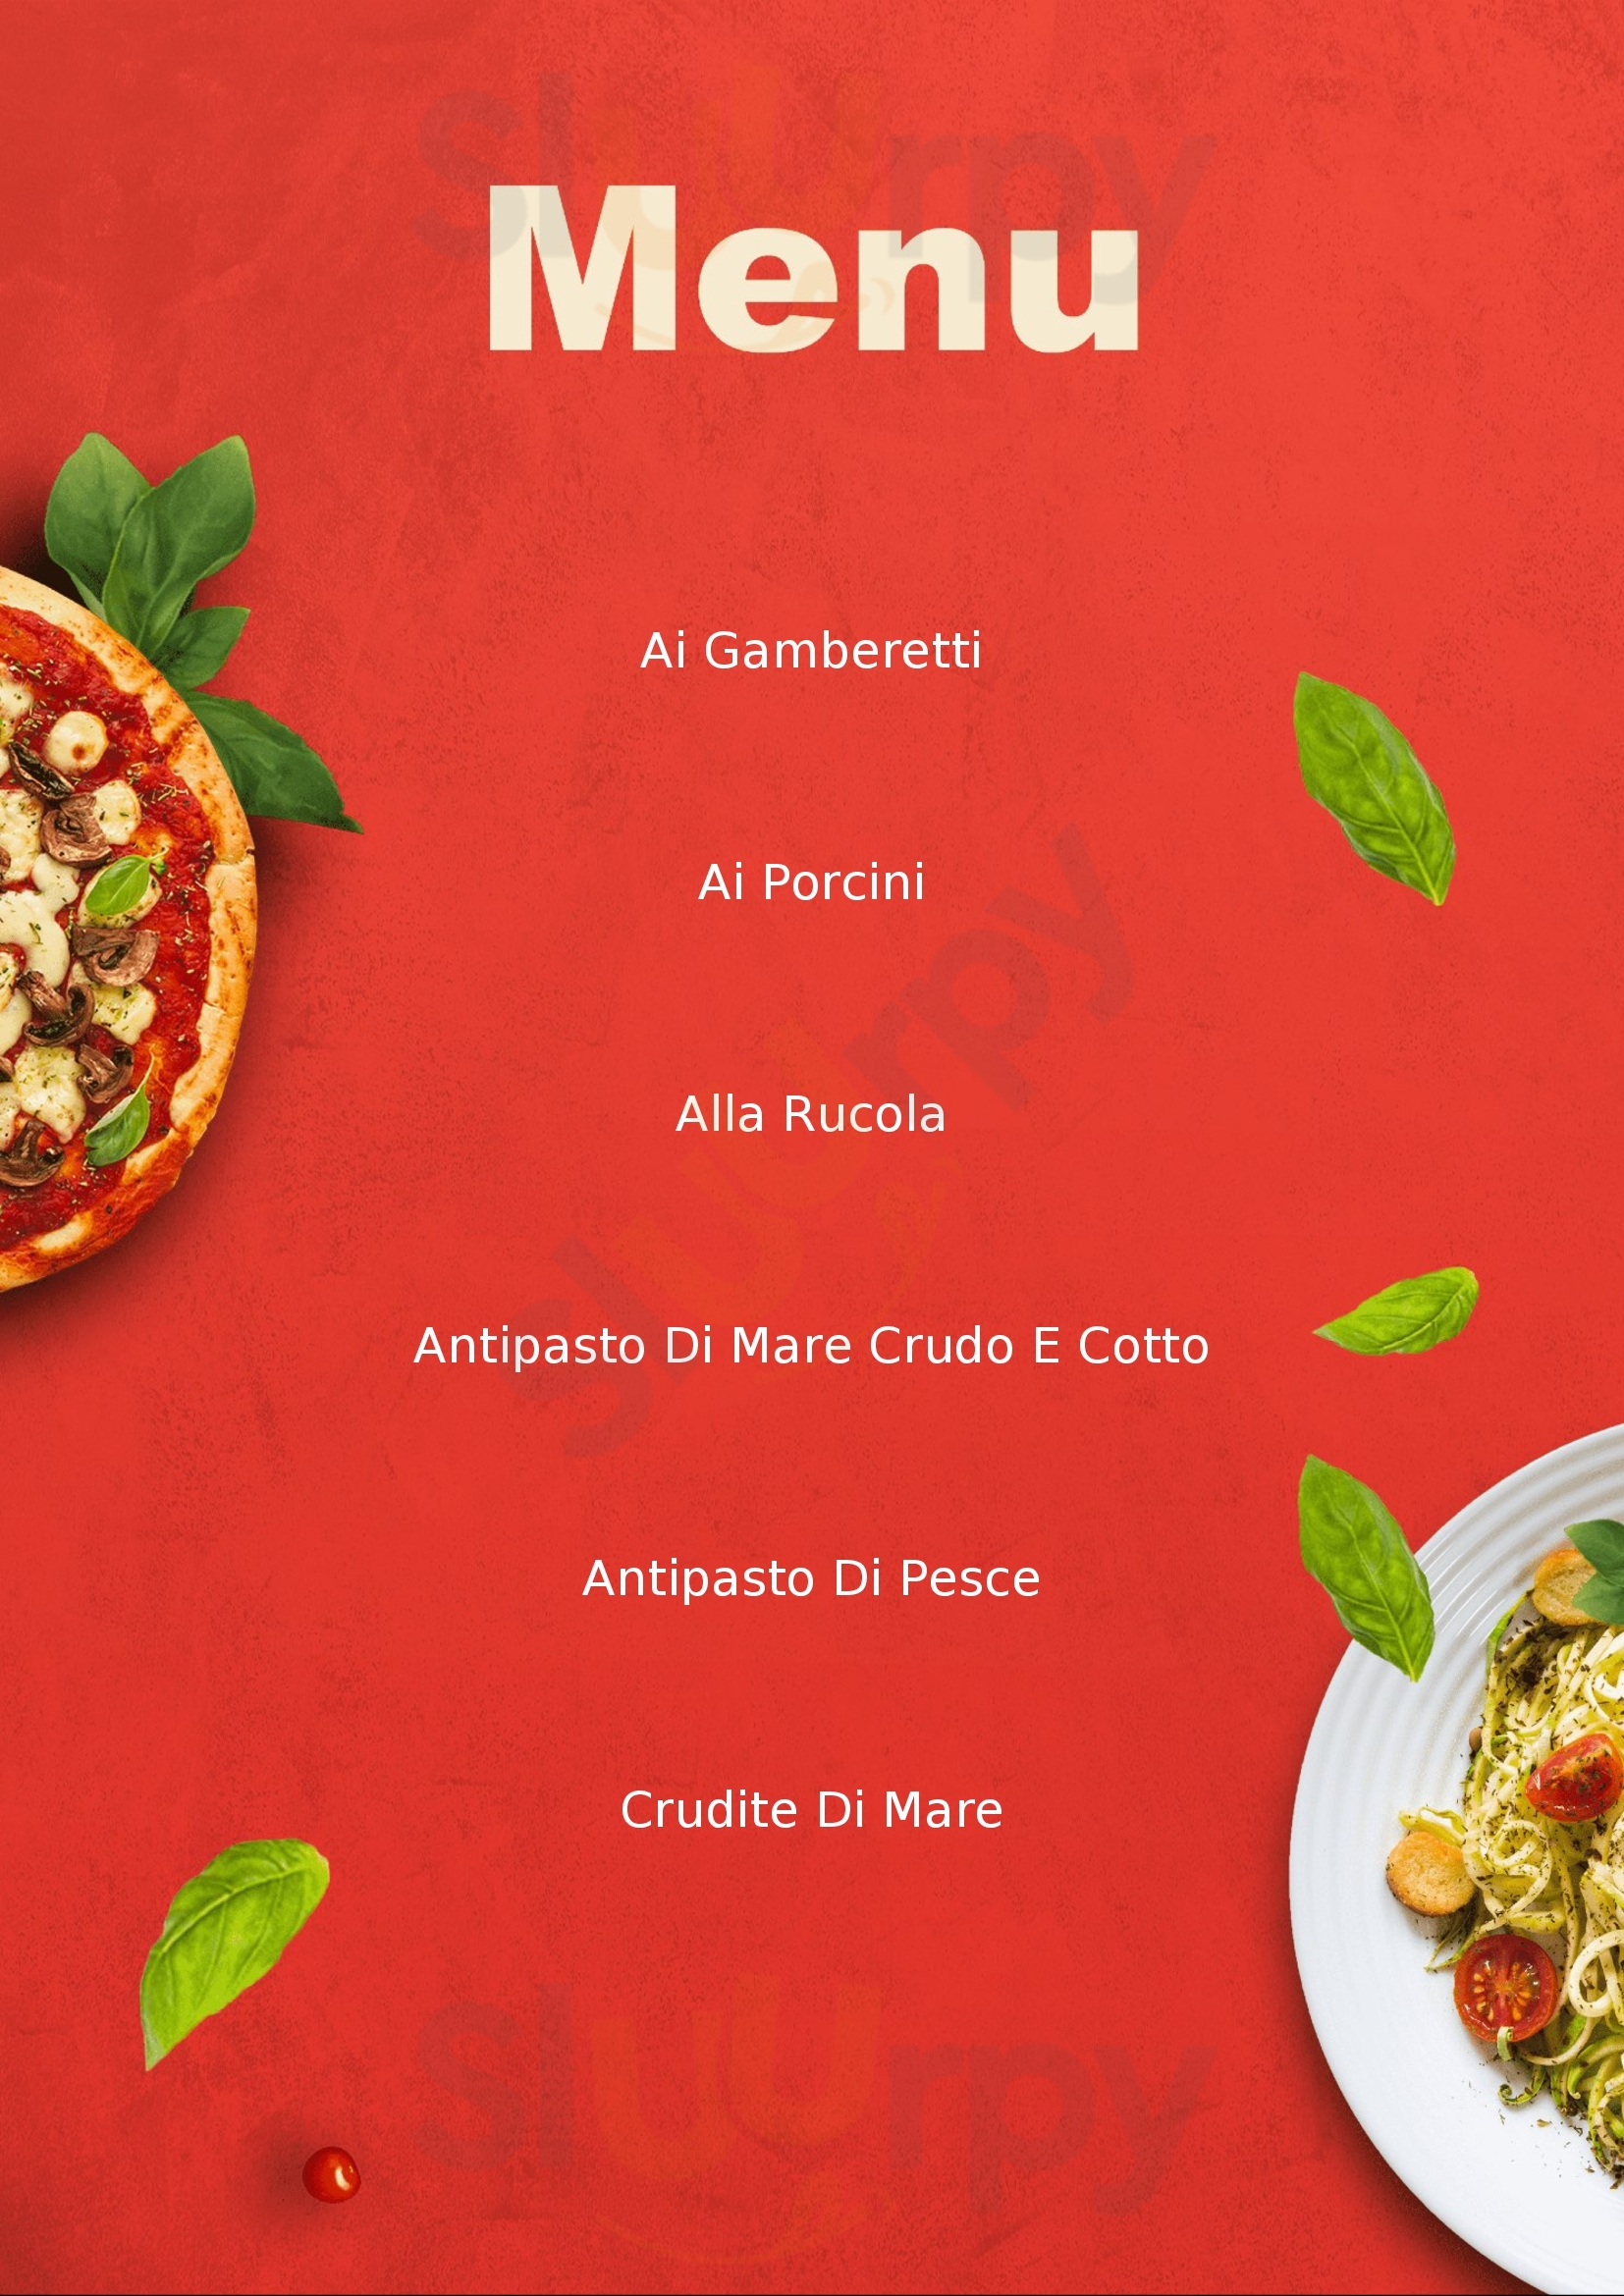 Le Palme Ristorante Pizzeria Piscina Ragusa menù 1 pagina